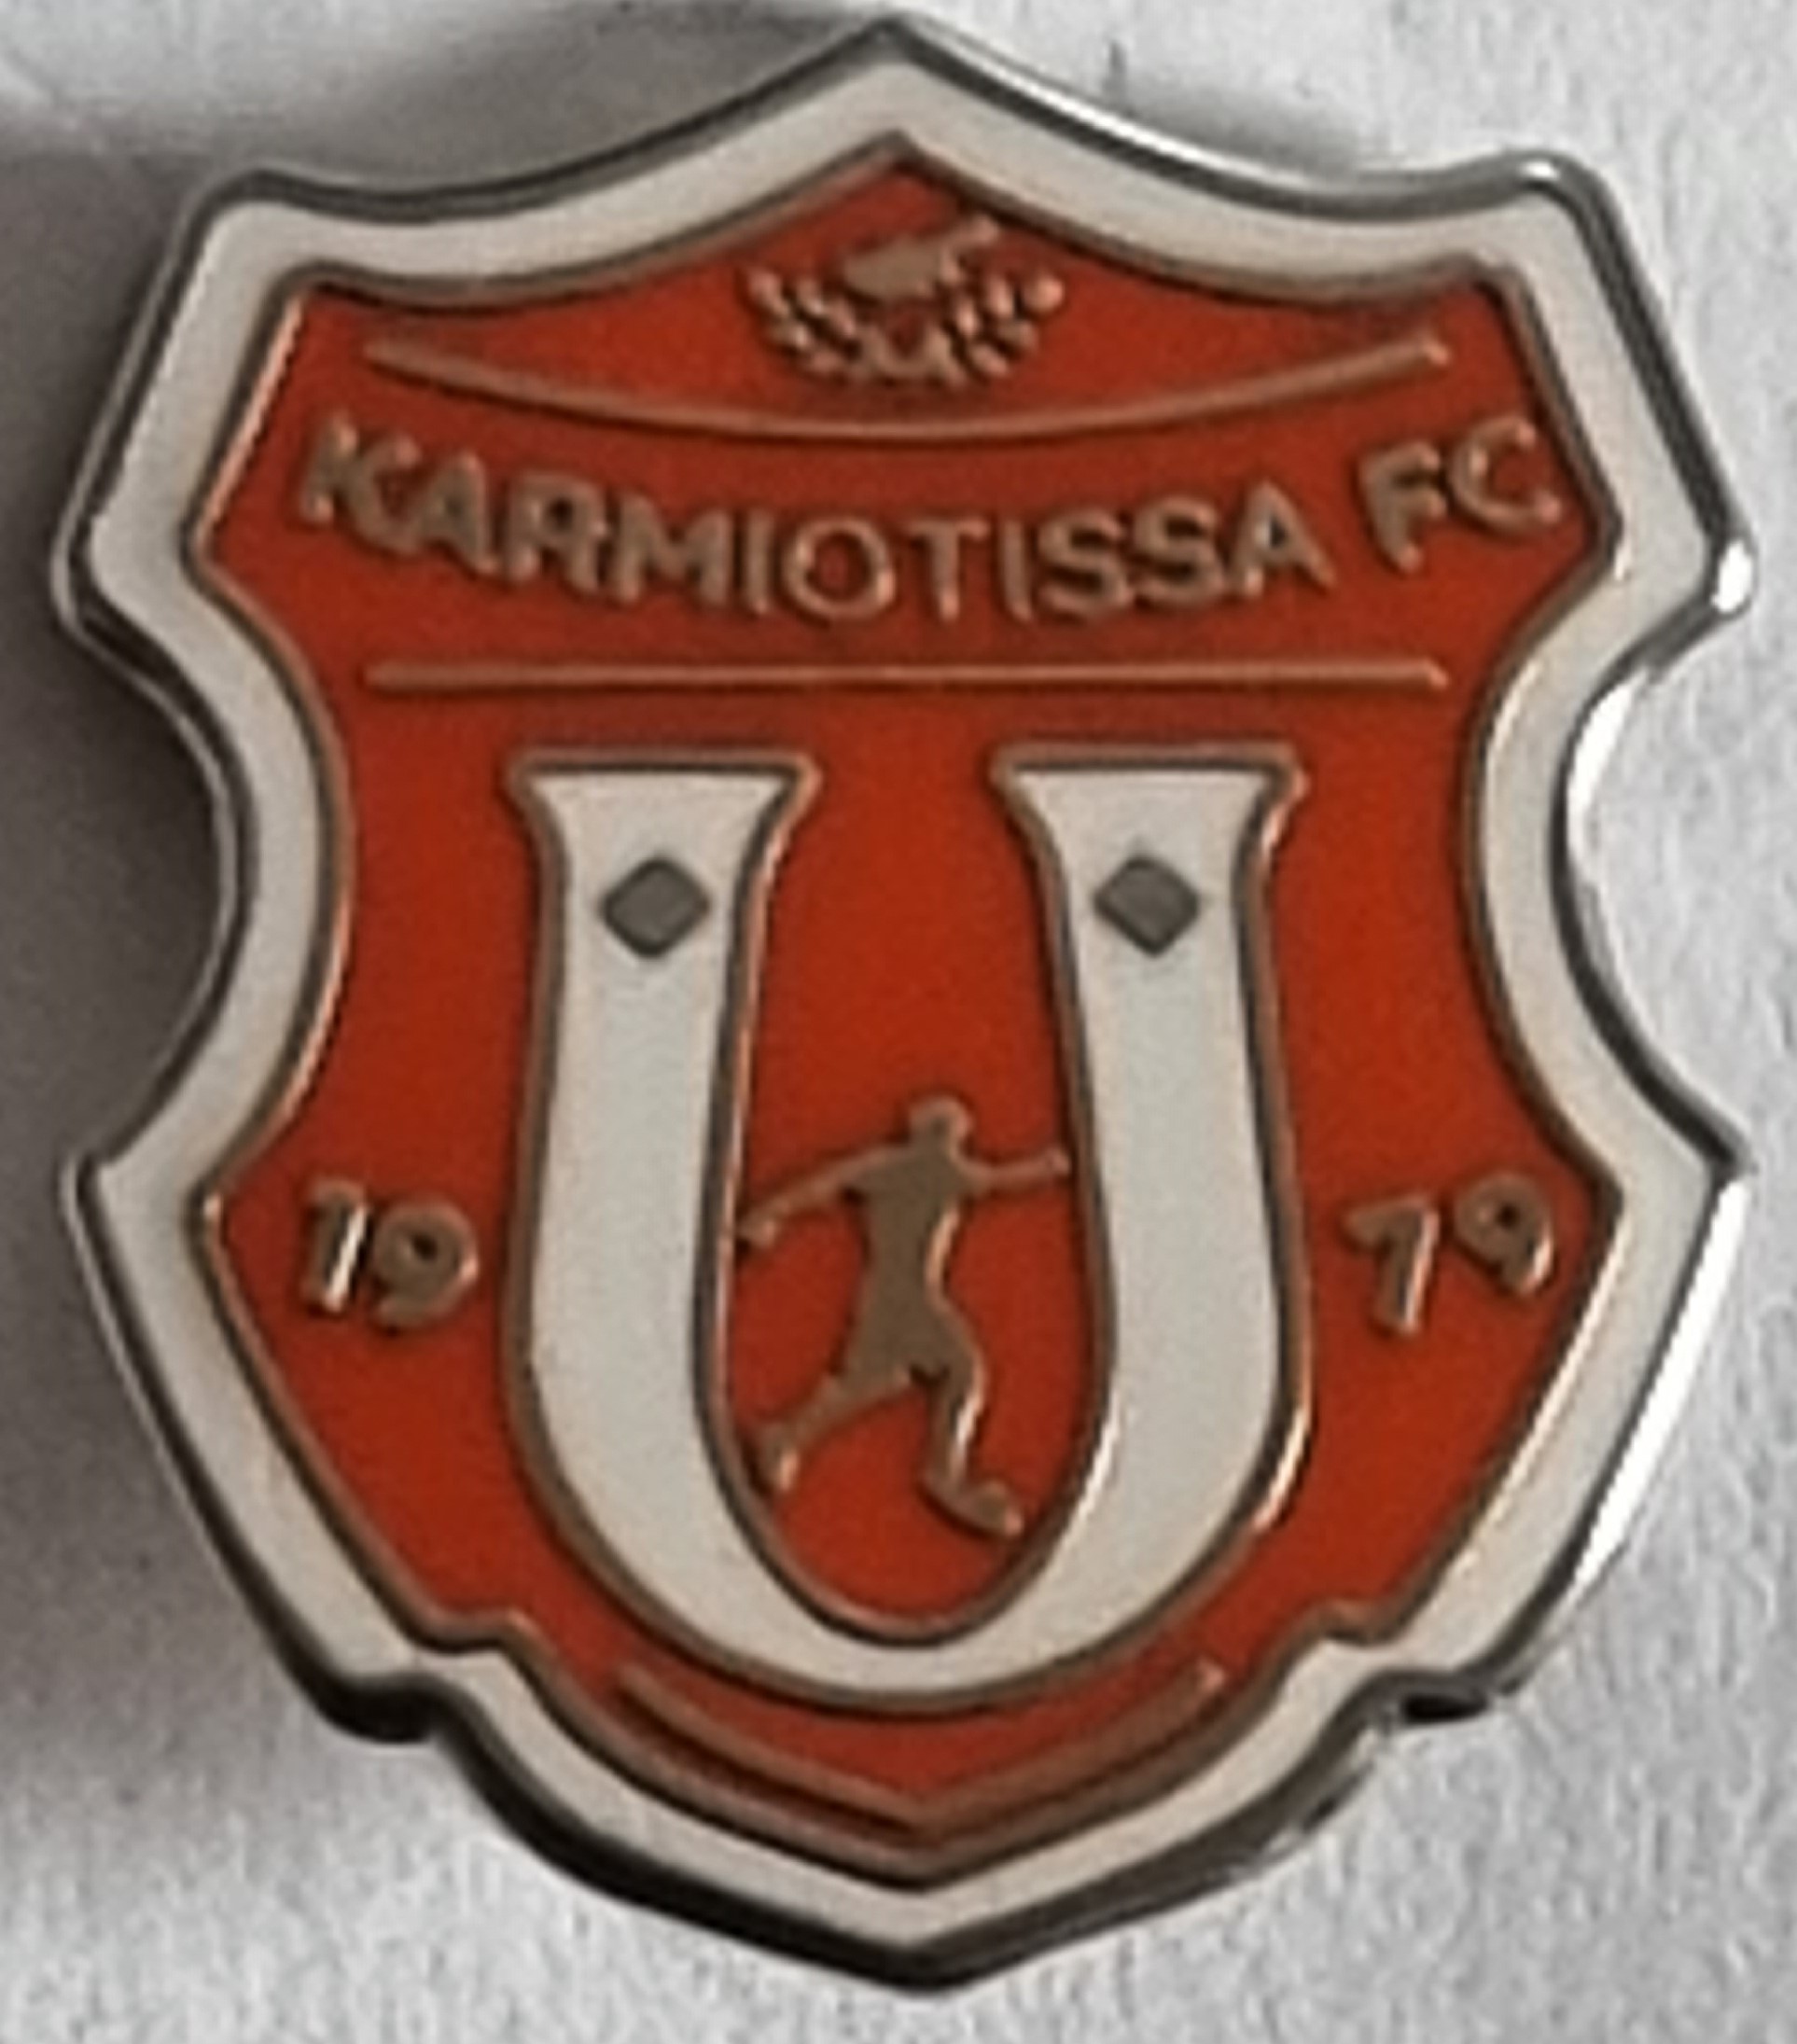 Pin Karmiotissa FC